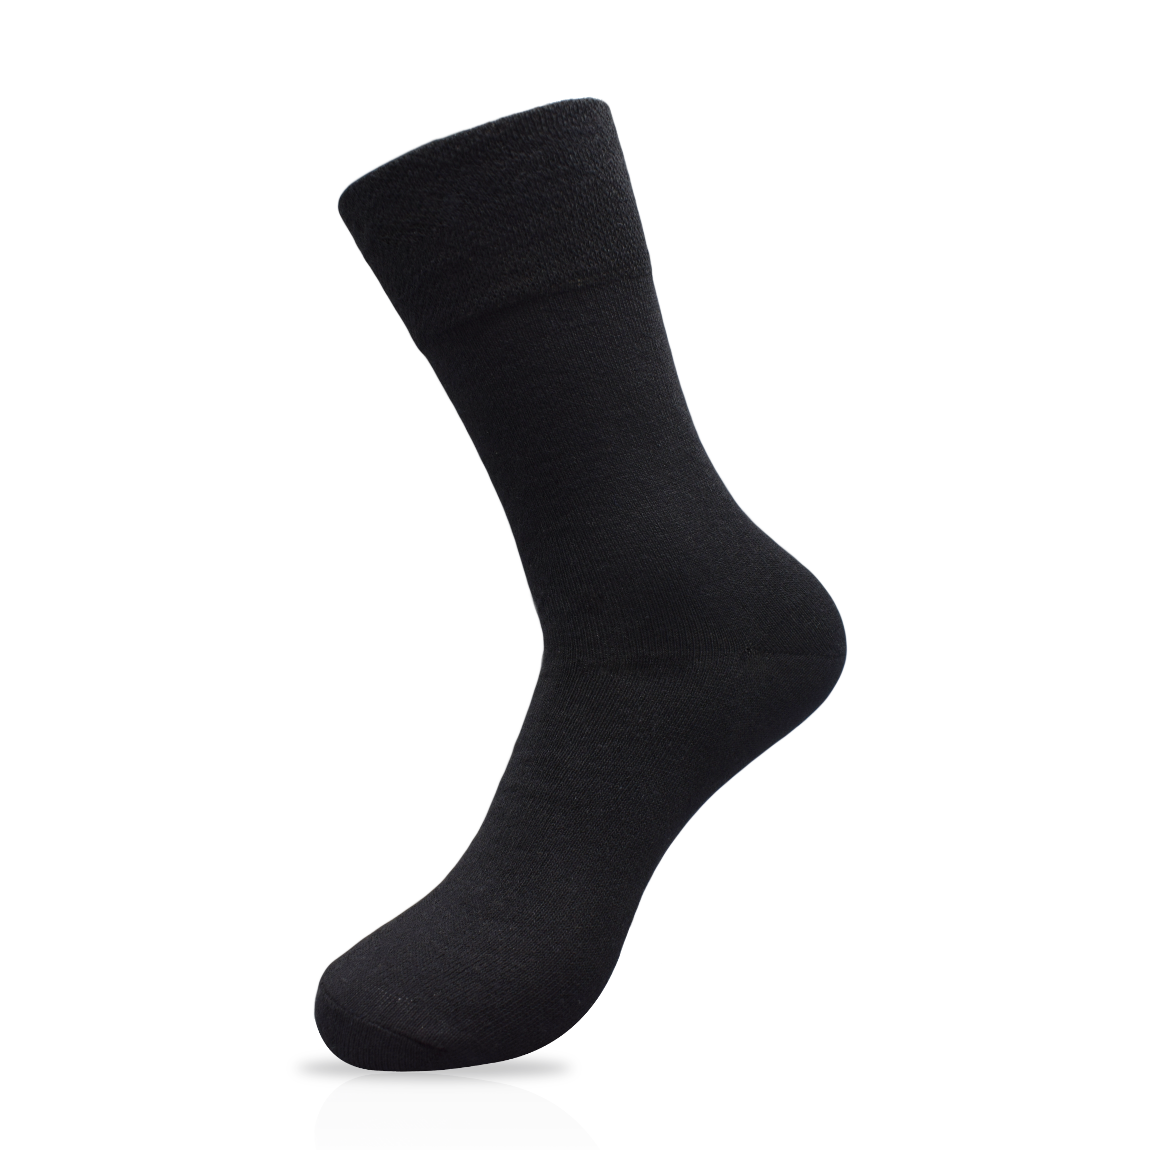 3x Pairs of Non Elastic Diabetic Socks for Women - Nuova Health